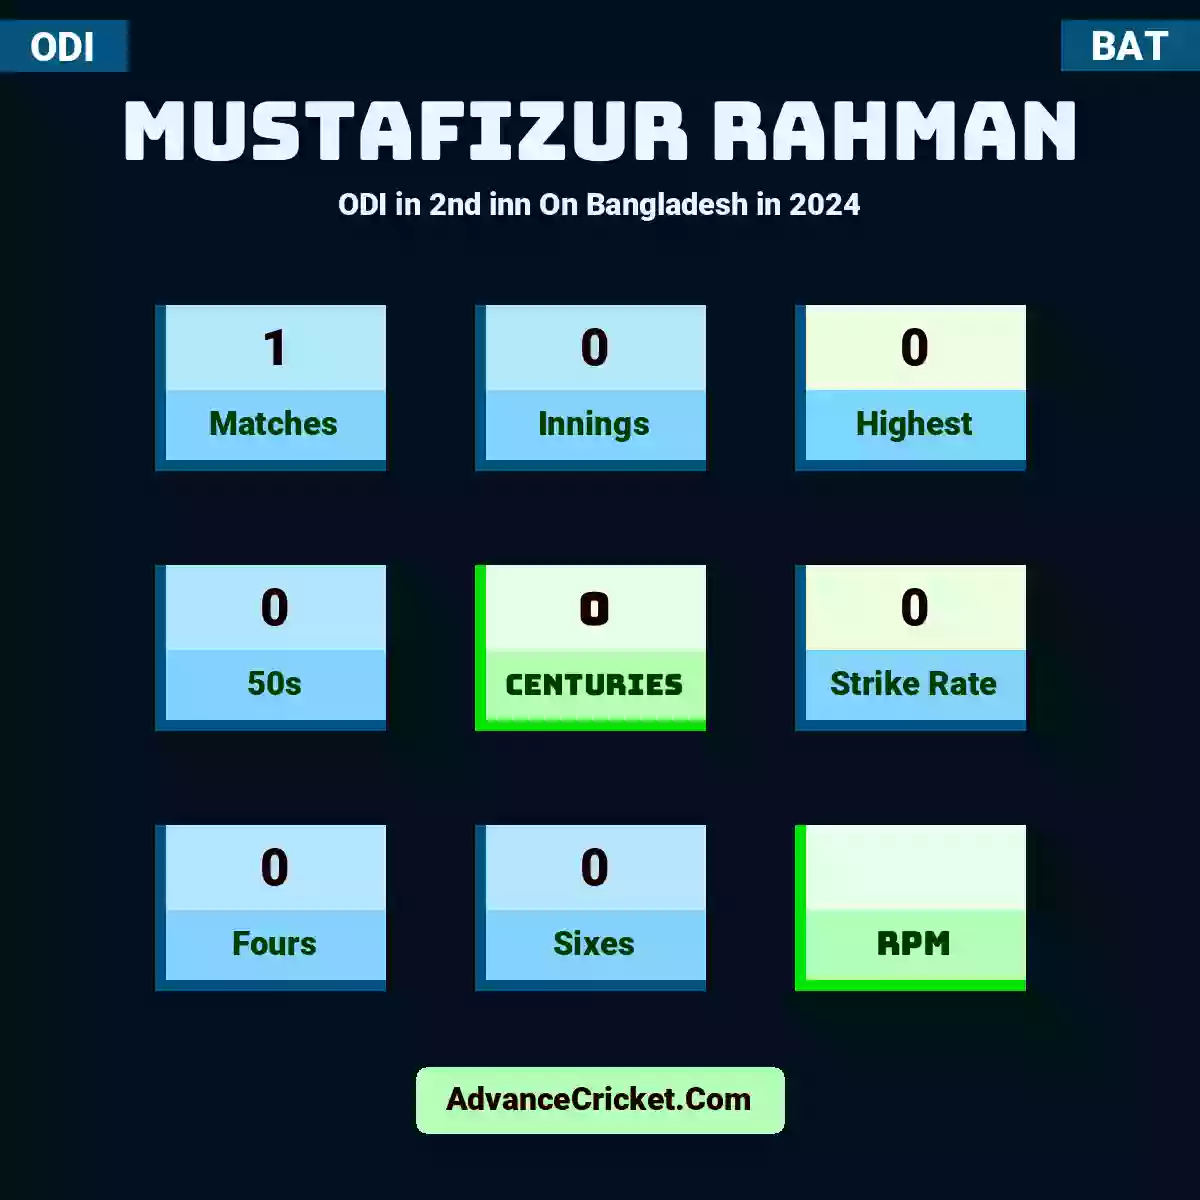 Mustafizur Rahman ODI  in 2nd inn On Bangladesh in 2024, Mustafizur Rahman played 1 matches, scored 0 runs as highest, 0 half-centuries, and 0 centuries, with a strike rate of 0. M.Rahman hit 0 fours and 0 sixes.